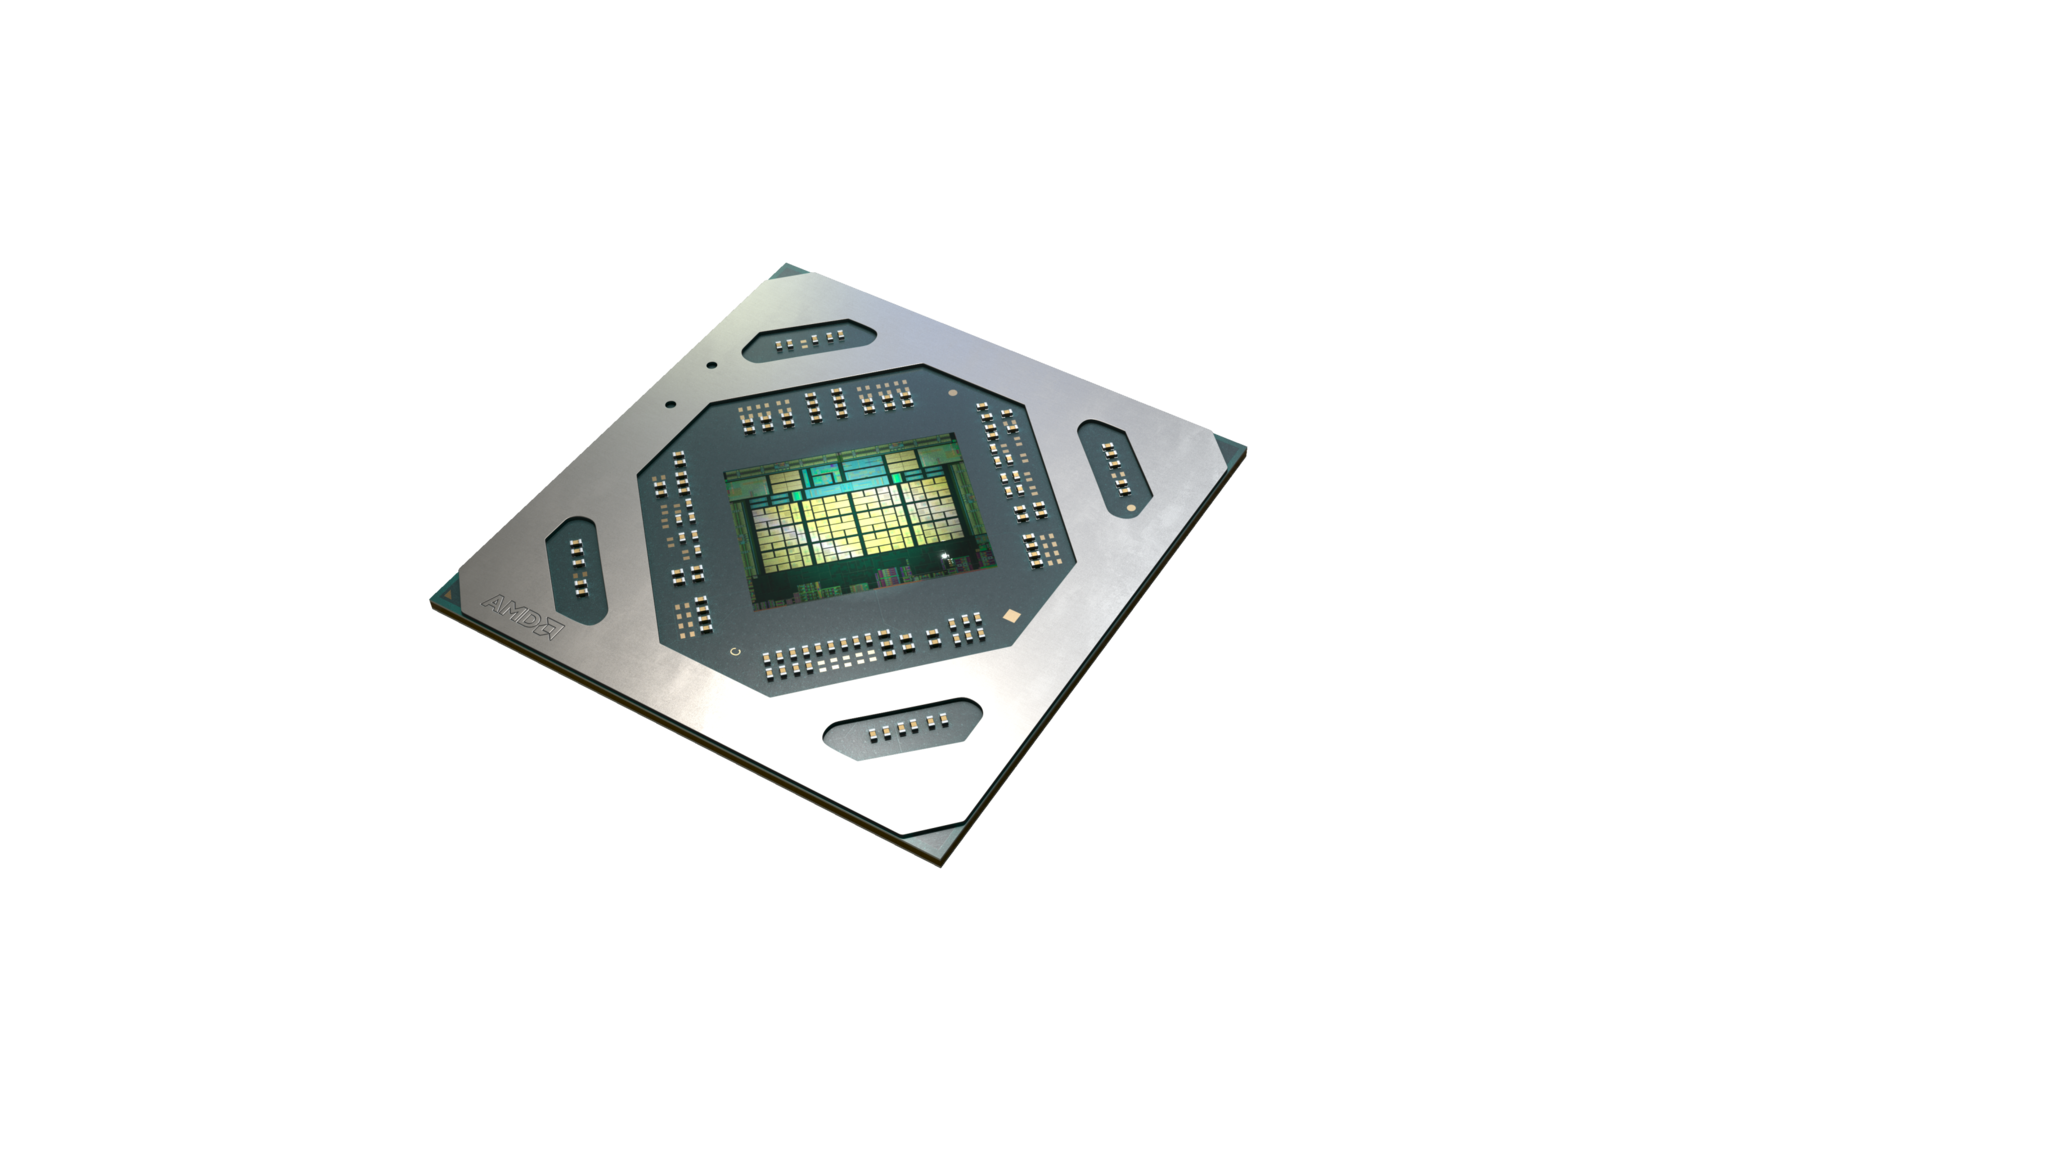 3 AMD เปิดตัวการ์ดจอ AMD Radeon RX 5500 ซีรี่ย์รุ่นใหม่ล่าสุดขนาด 7nm ทั้งเดสก์ท็อปและแล็ปท็อปเน้นตอบโจทย์เกมส์มิ่งในราคาสุดคุ้ม